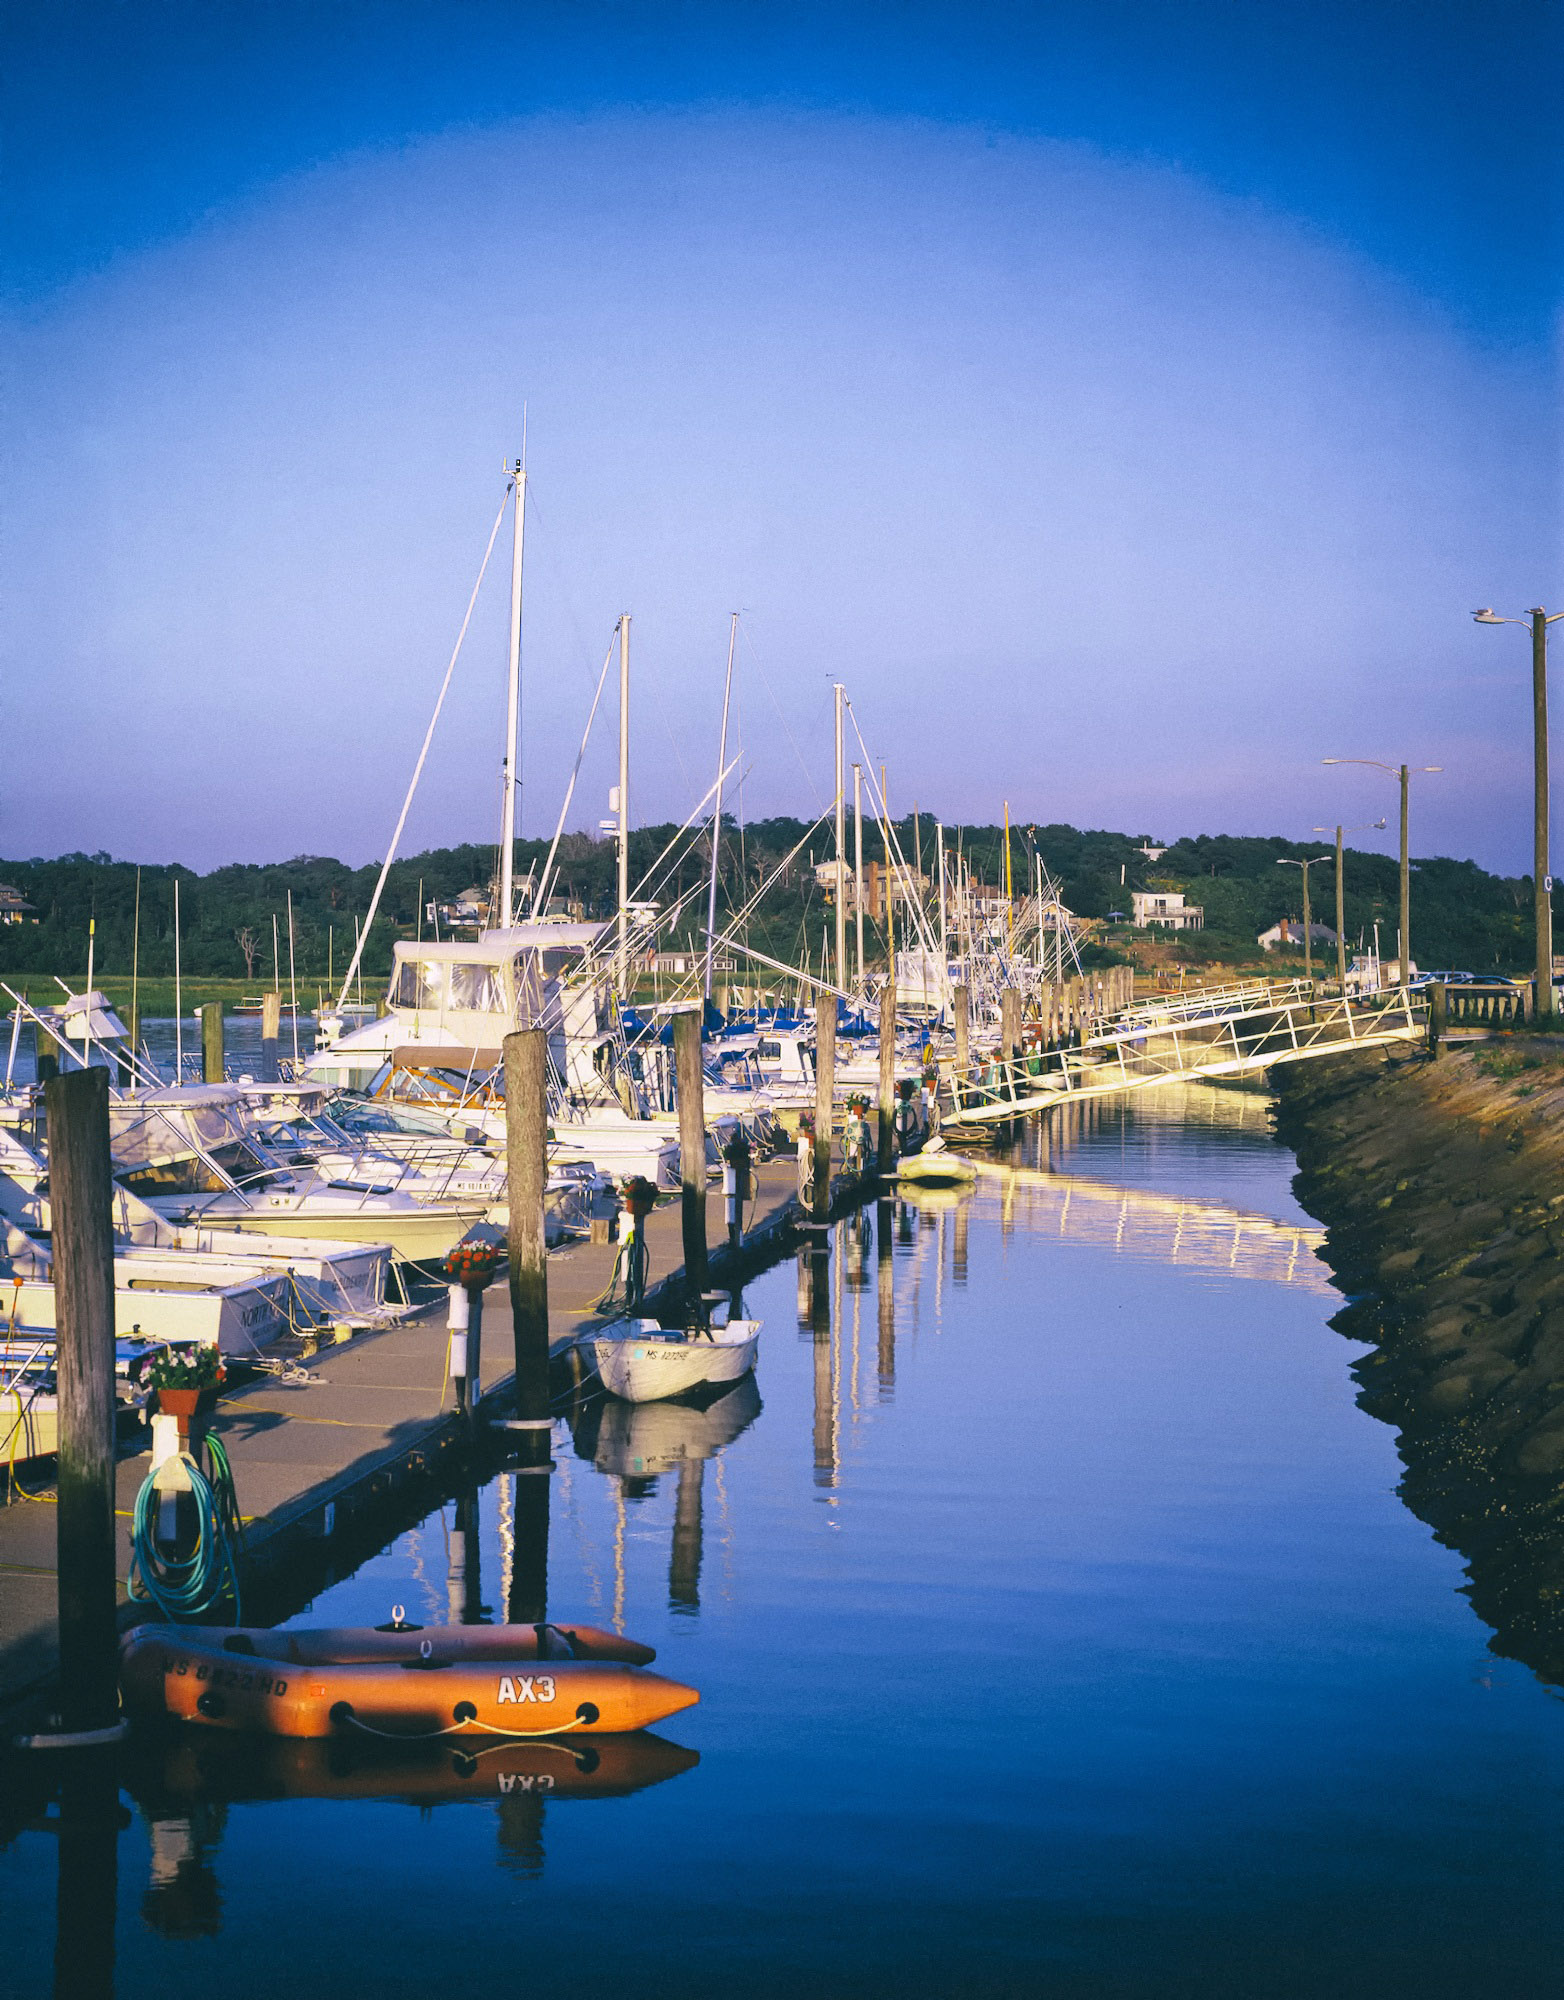 Harbor full of boats at Cape Cod, Massachusetts image - Free stock